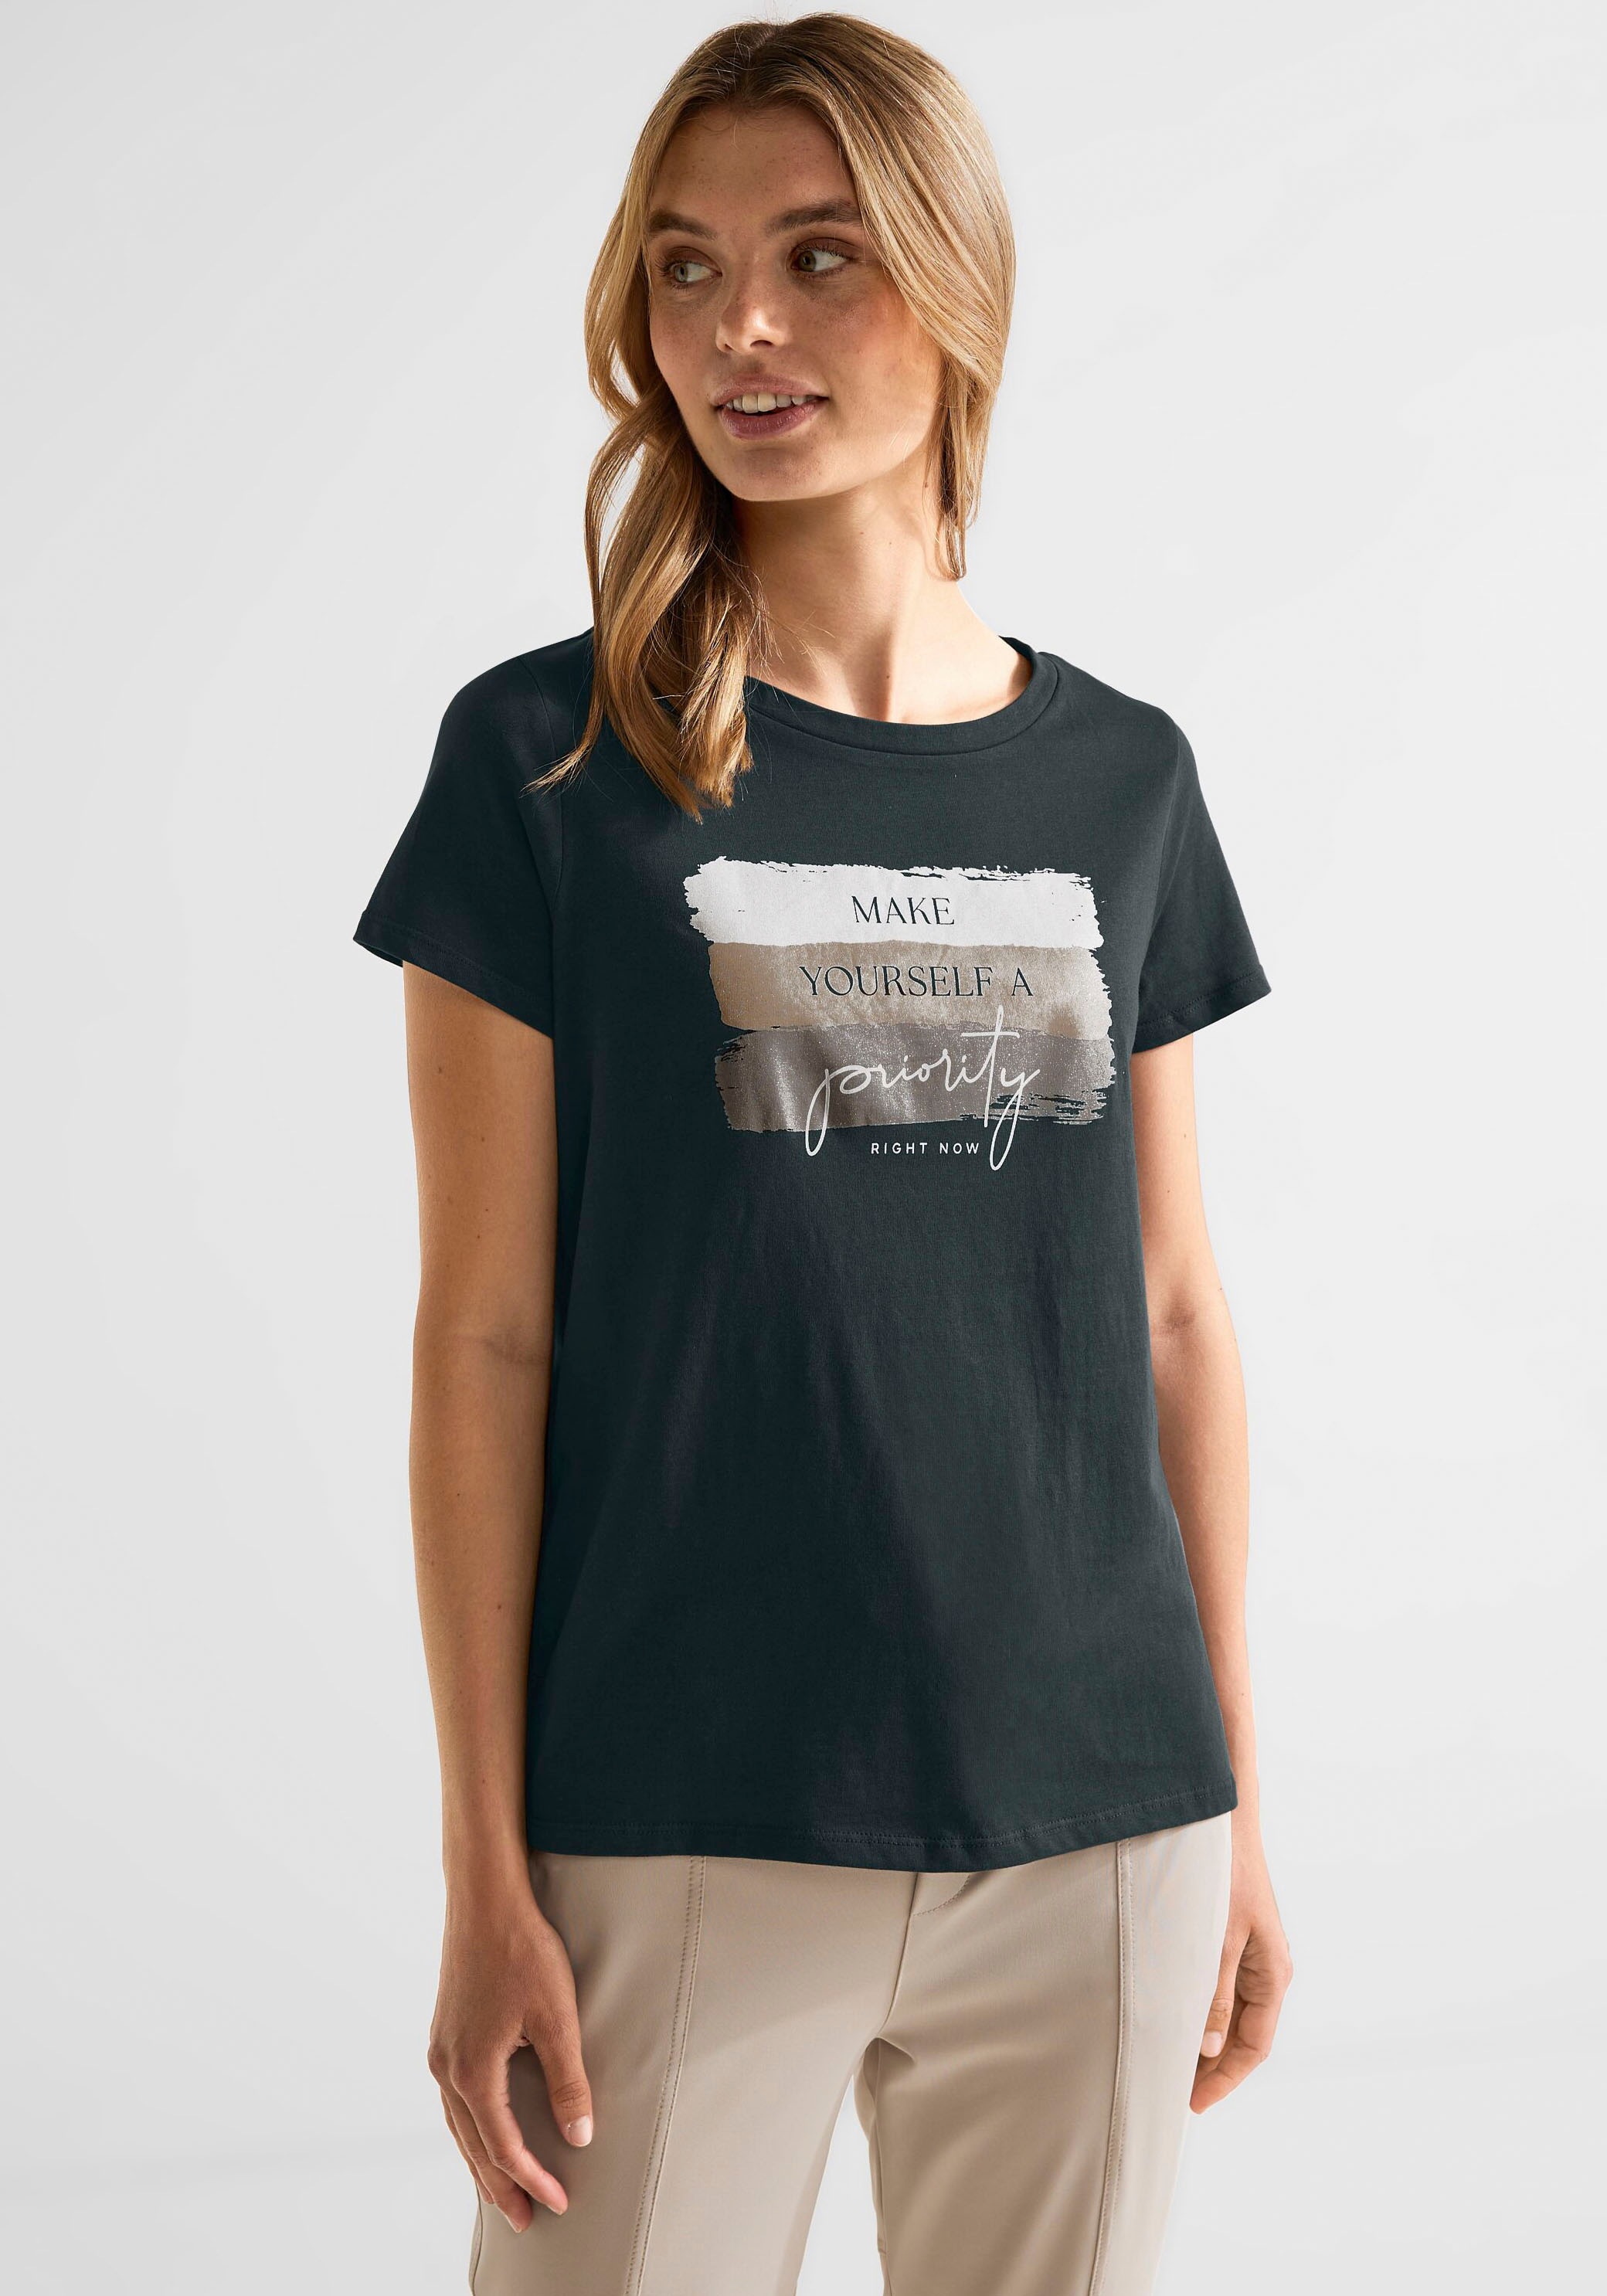 OTTO STREET ONE hüftlangen bei online im T-Shirt, bestellen Schnitt